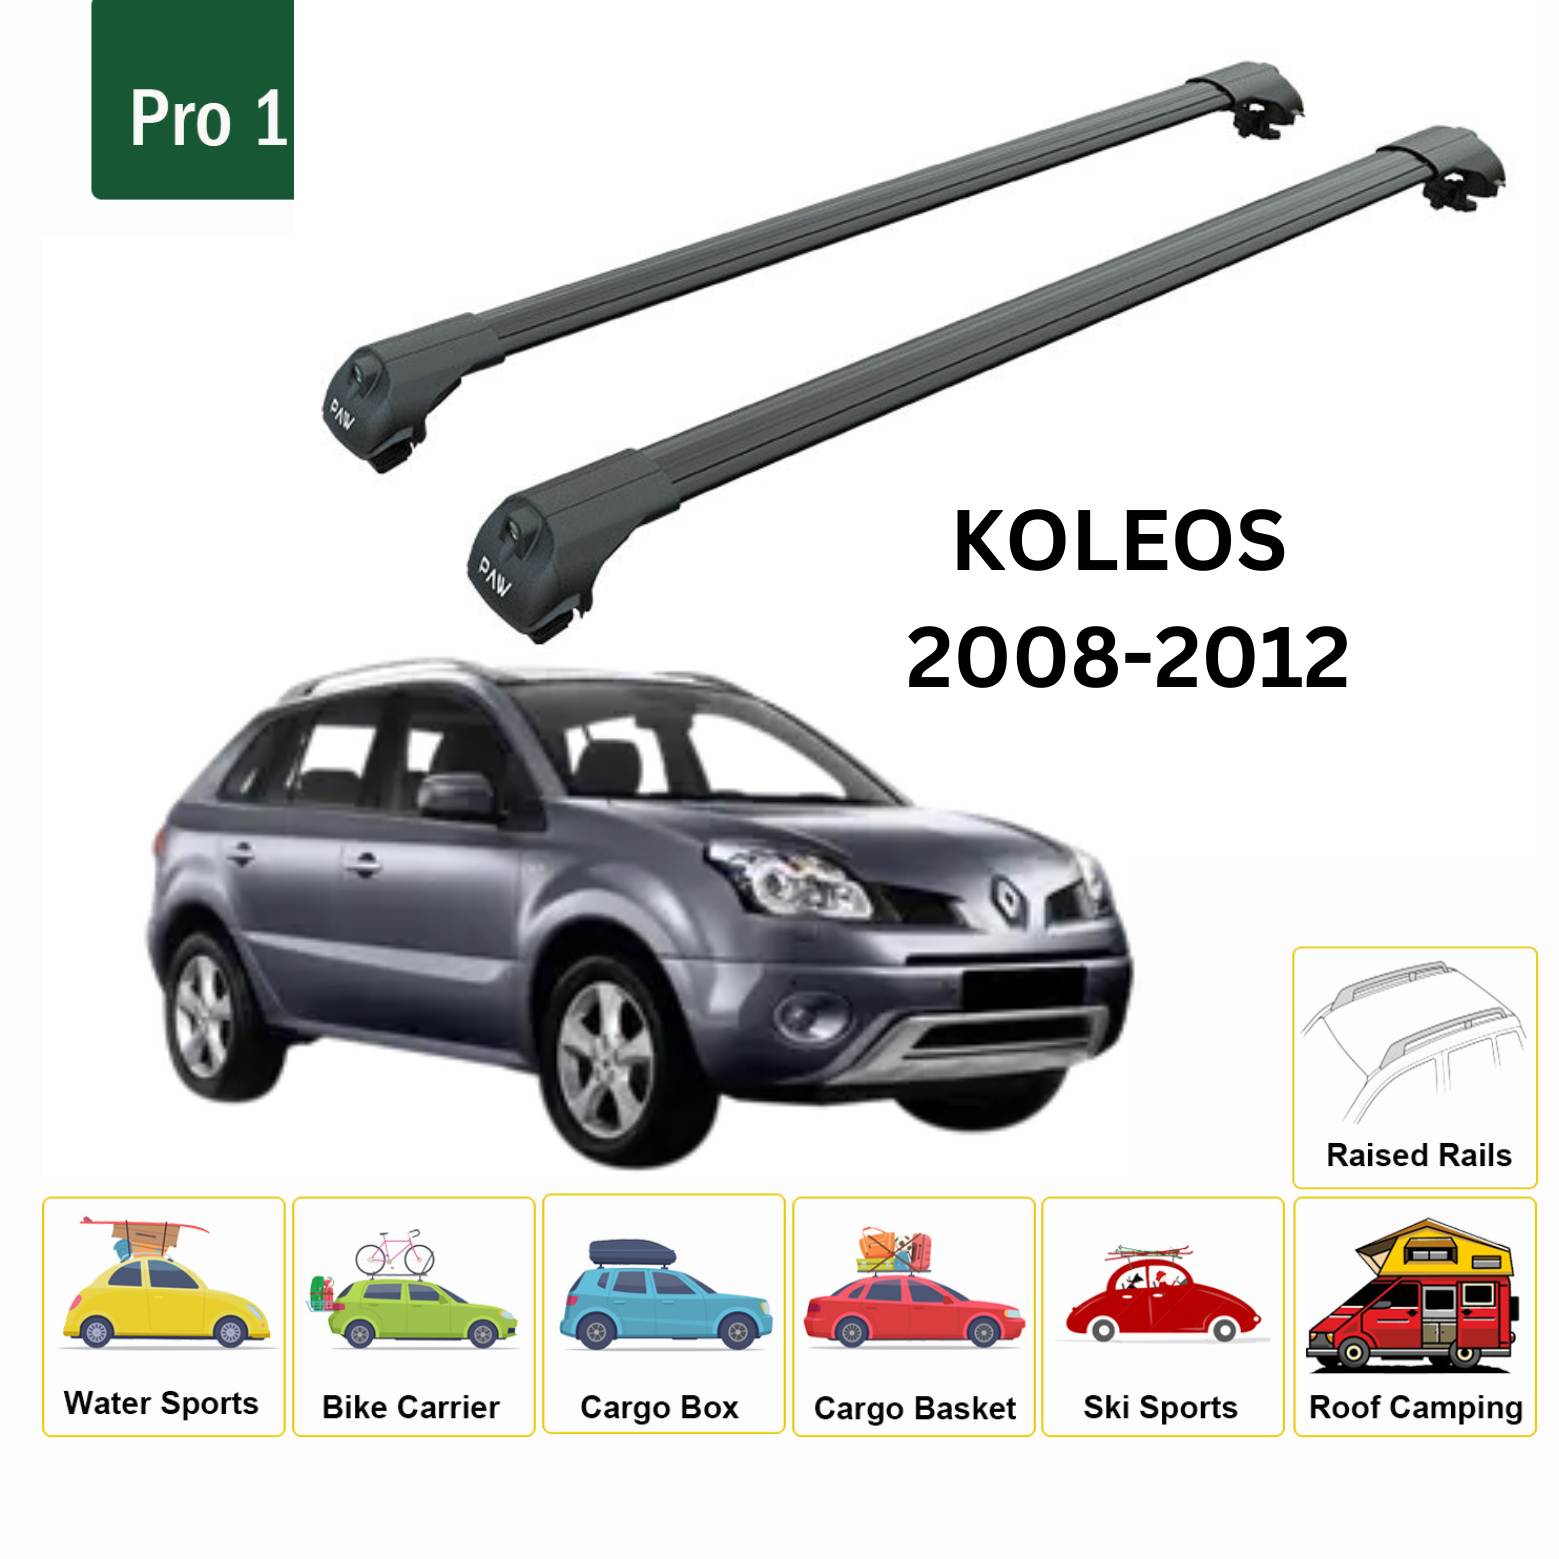 For Renault Koleos 2008-2012 Roof Rack System, Aluminium Cross Bar, Metal Bracket, Normal Roof, Black